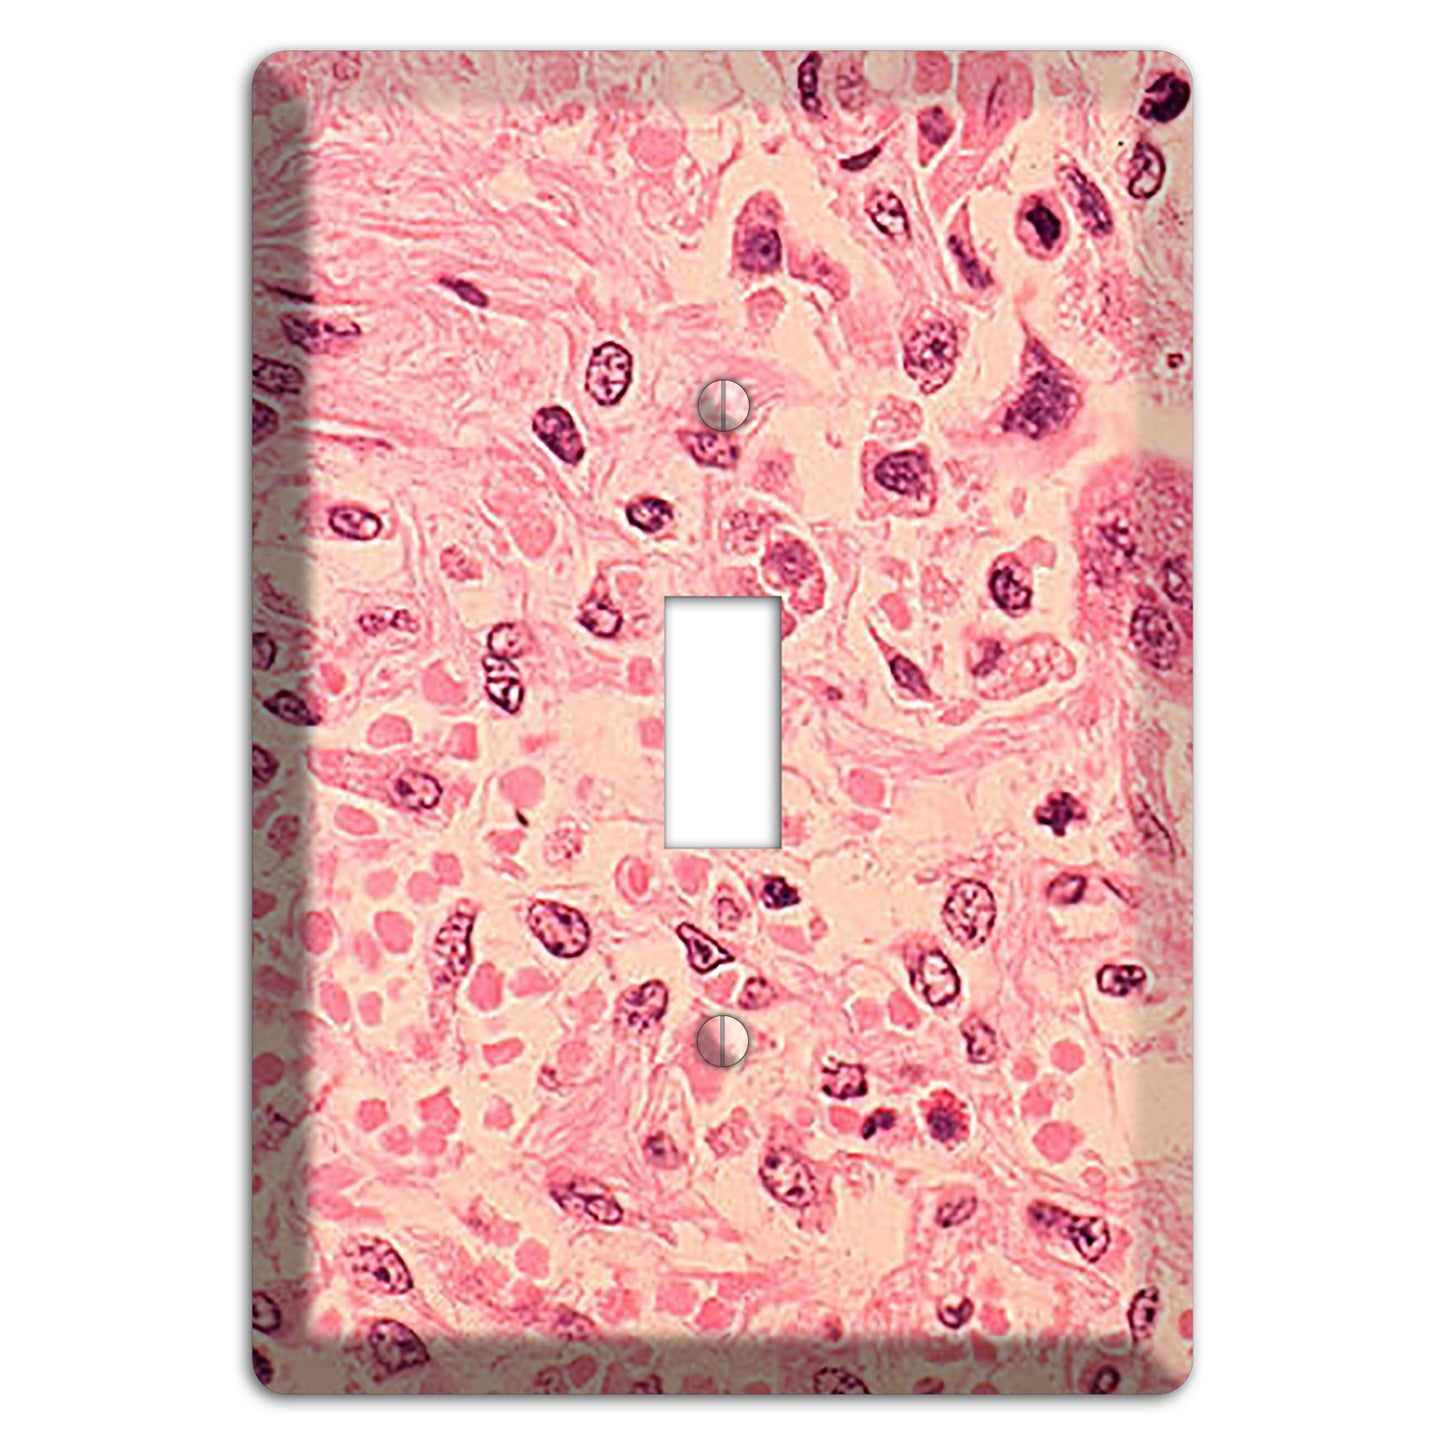 Measles Pneumonia Cover Plates